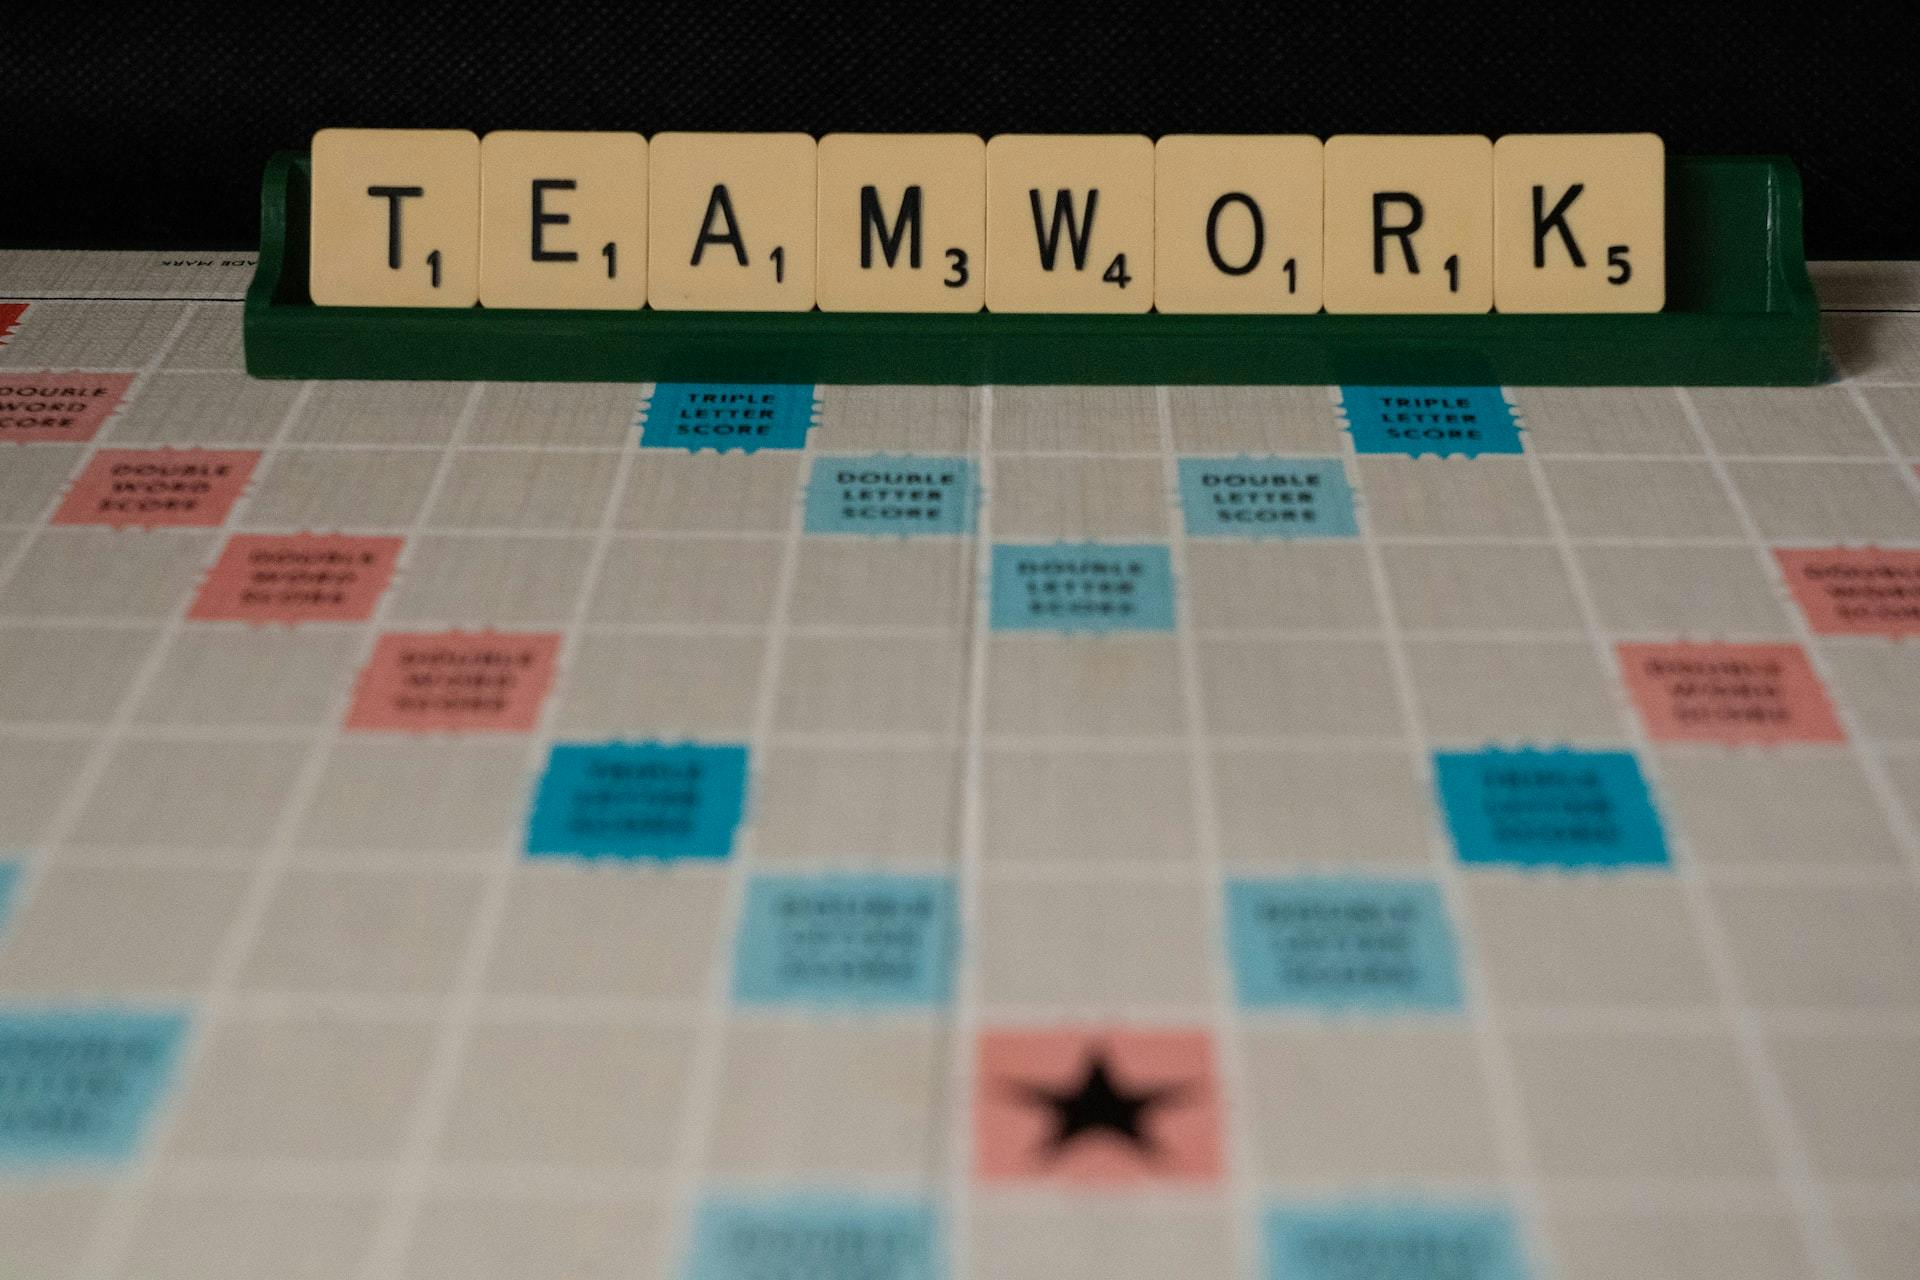 A scrabble board with words spelling teamwork.